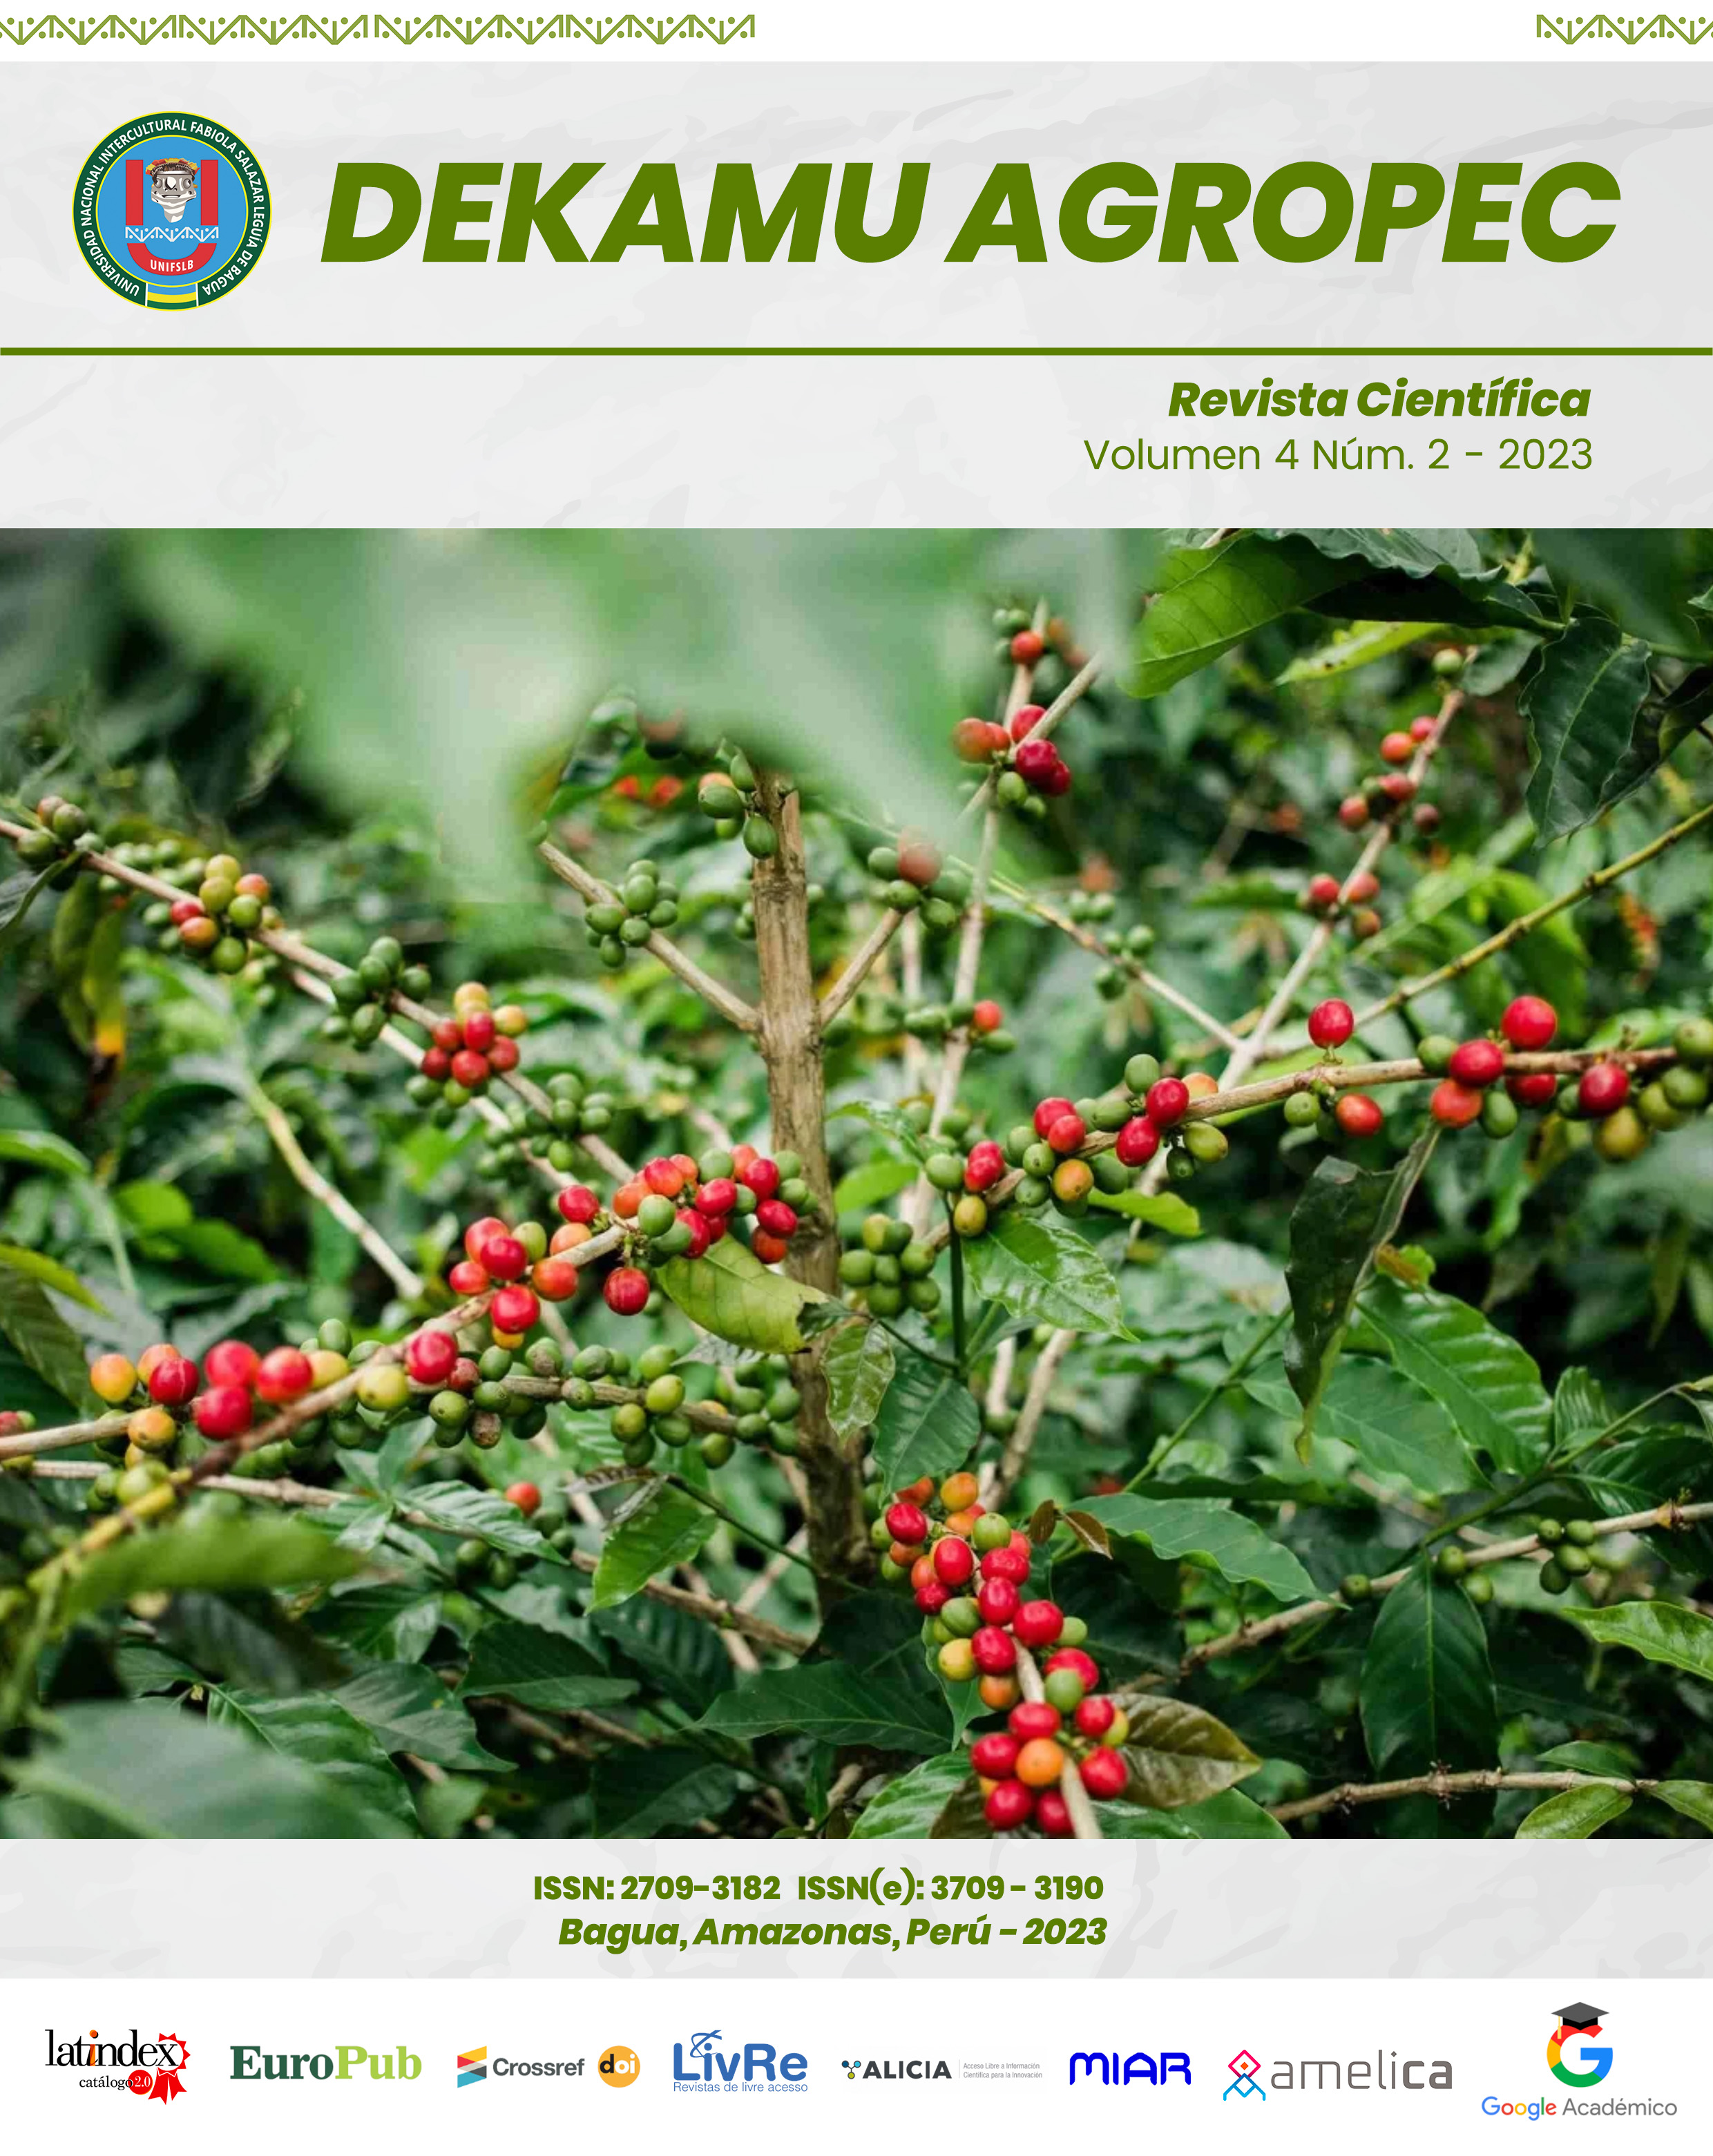 					Ver Vol. 4 Núm. 2 (2023):  Revista de Investigación Científica: Dékamu Agropec 
				